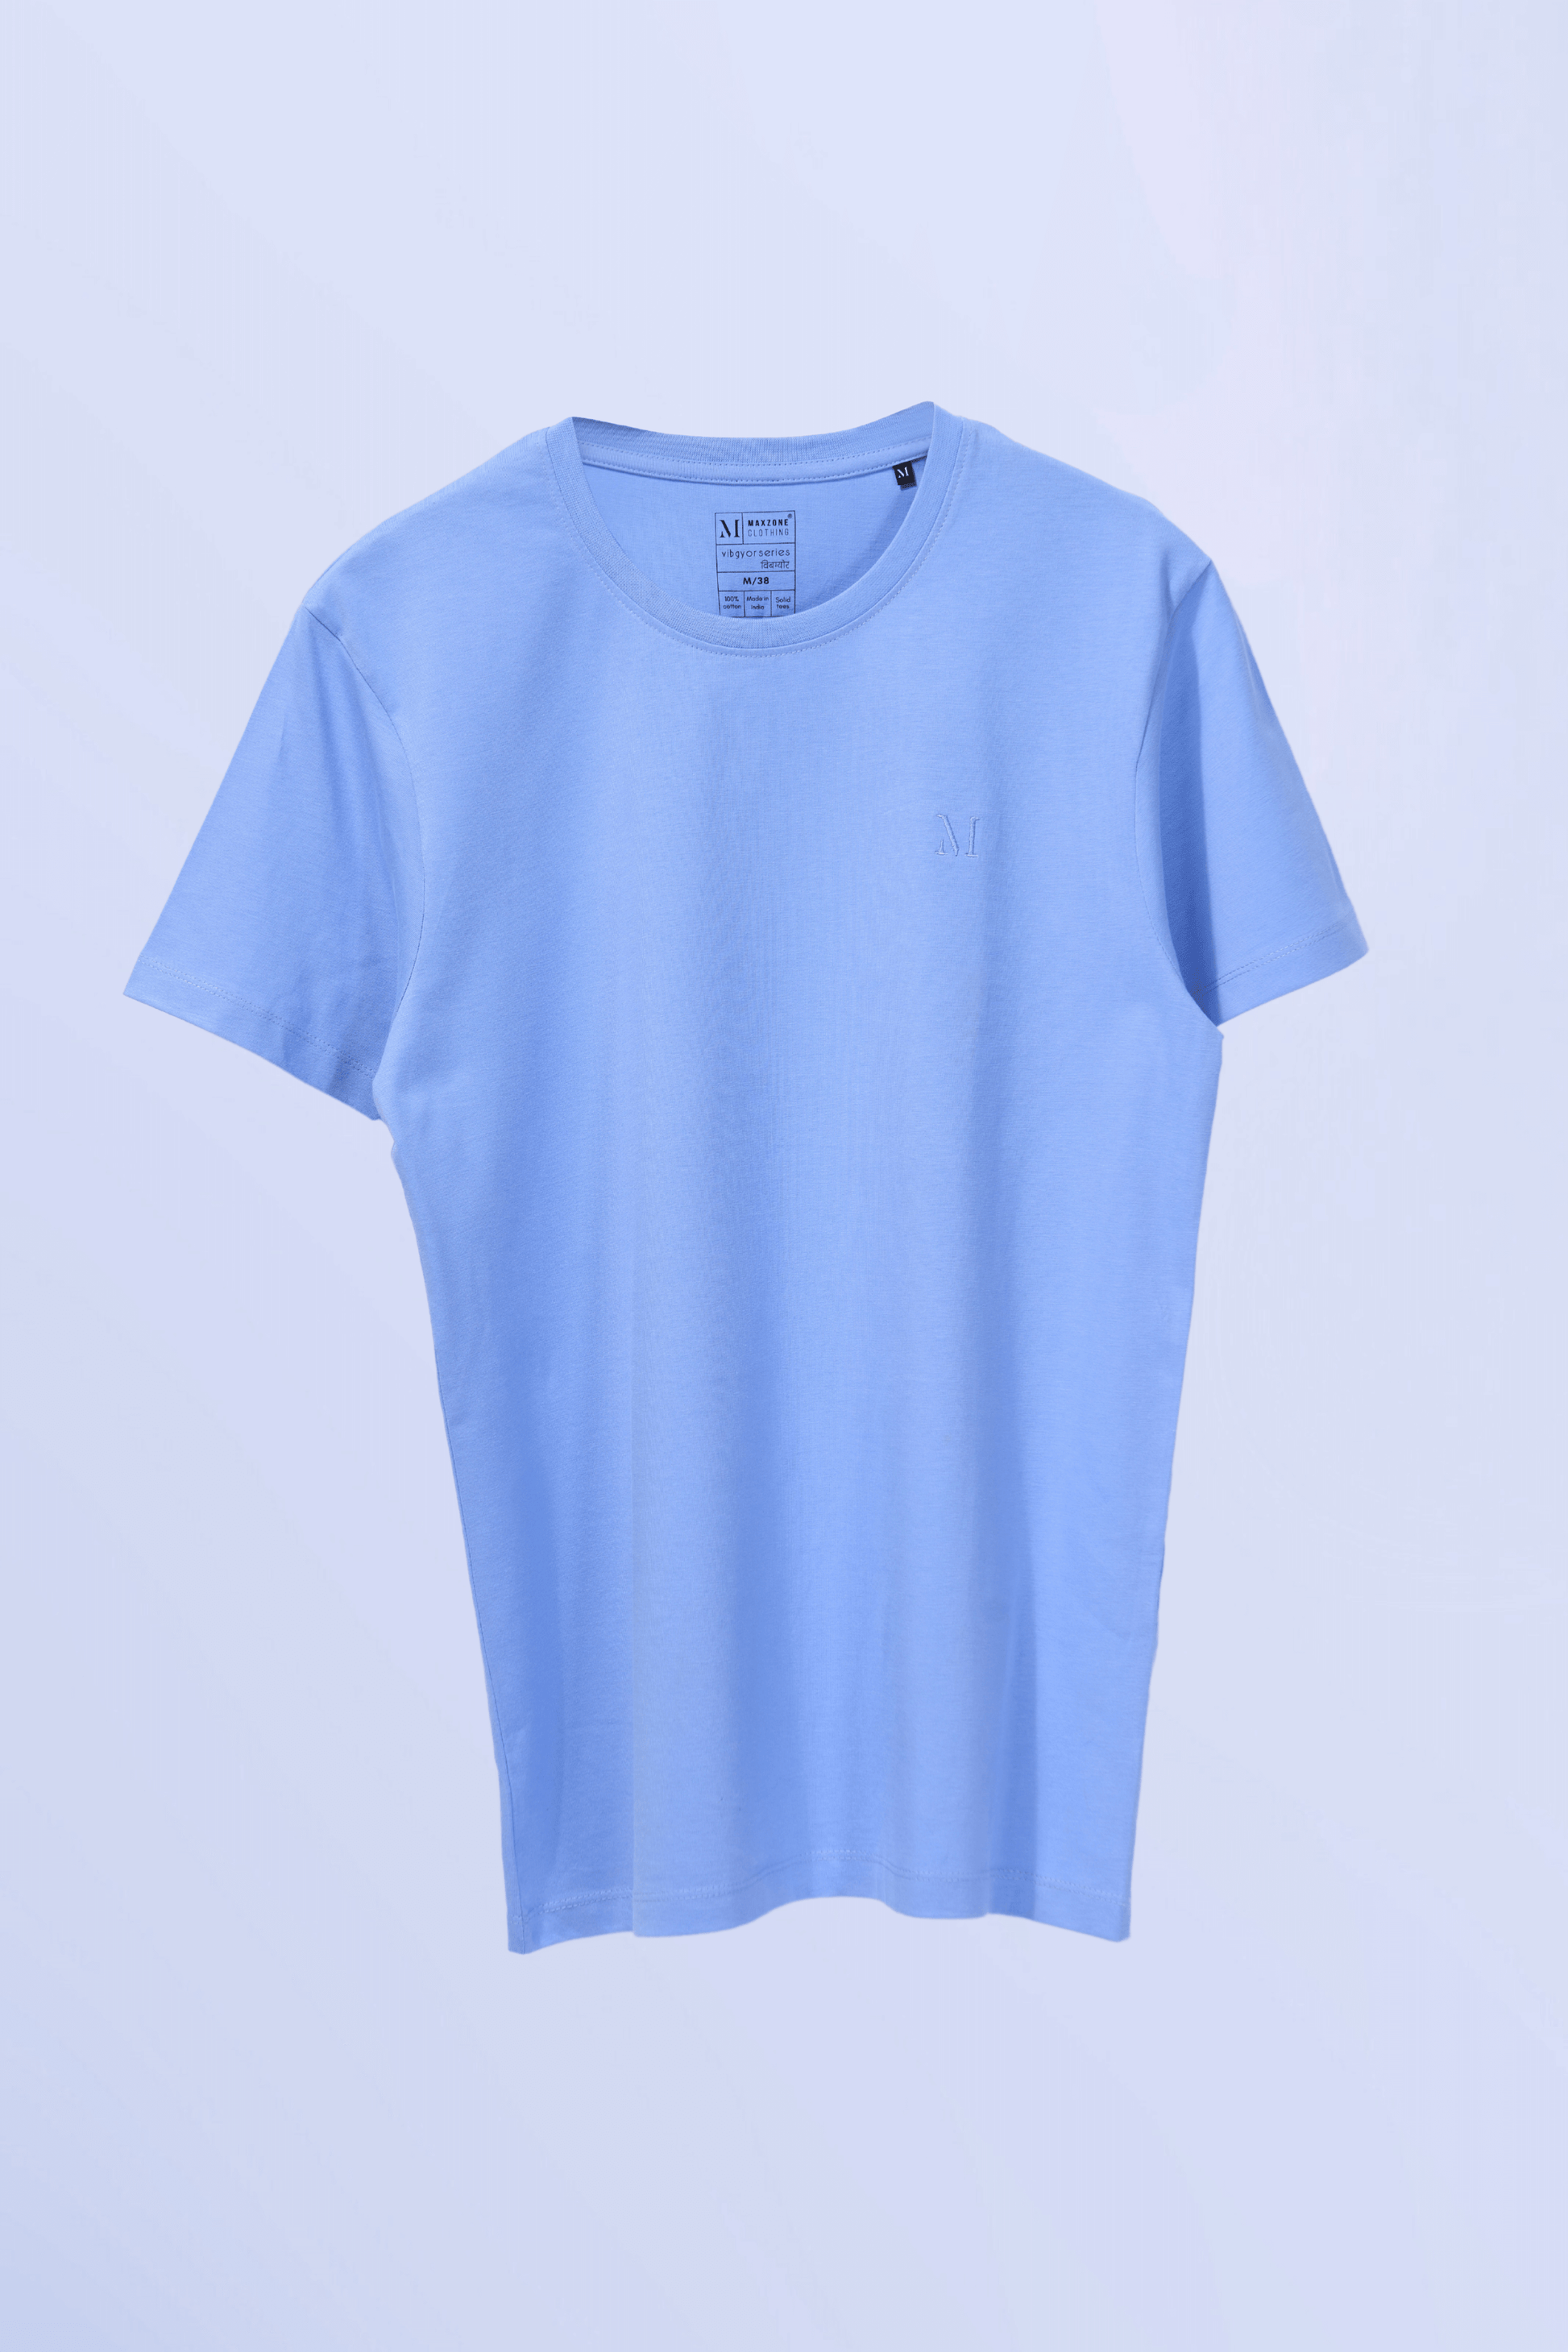 Pastel T-Shirt Combo T-shirts Maxzone Clothing   